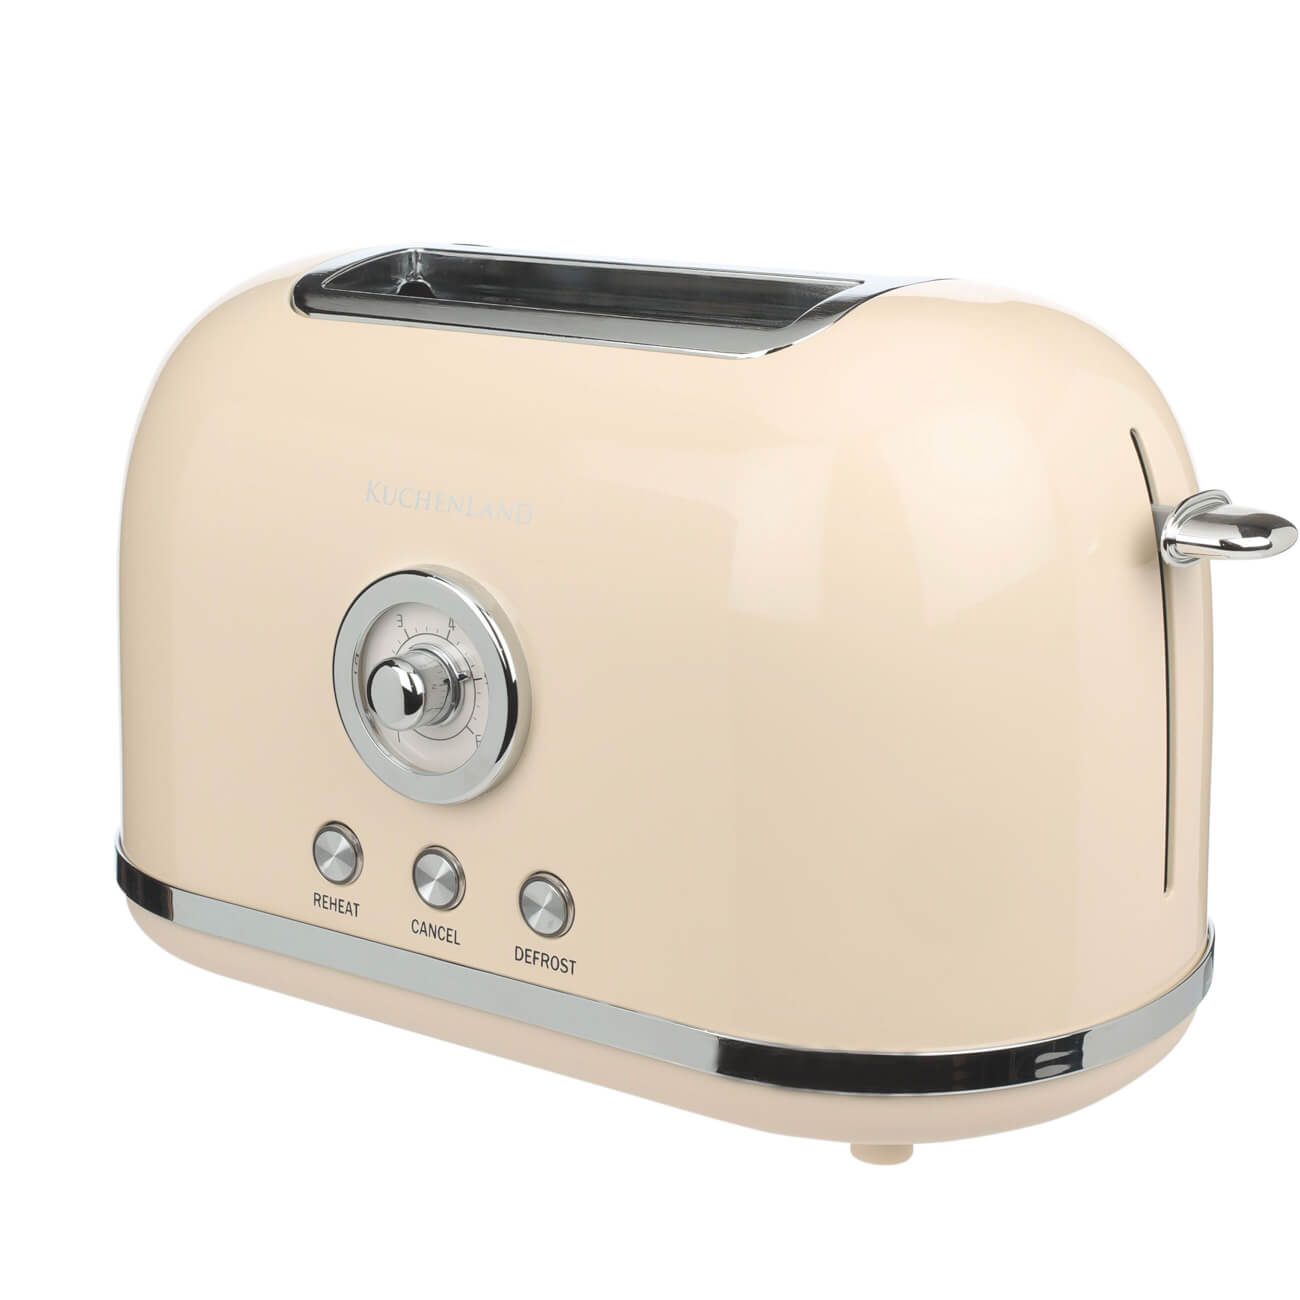 Тостер электрический, 685-815 Вт, 6 режимов, металл/пластик, бежевый, Vintage kitchen тостер luazon lt 03 750 вт 6 режимов прожарки 2 тоста серебристый